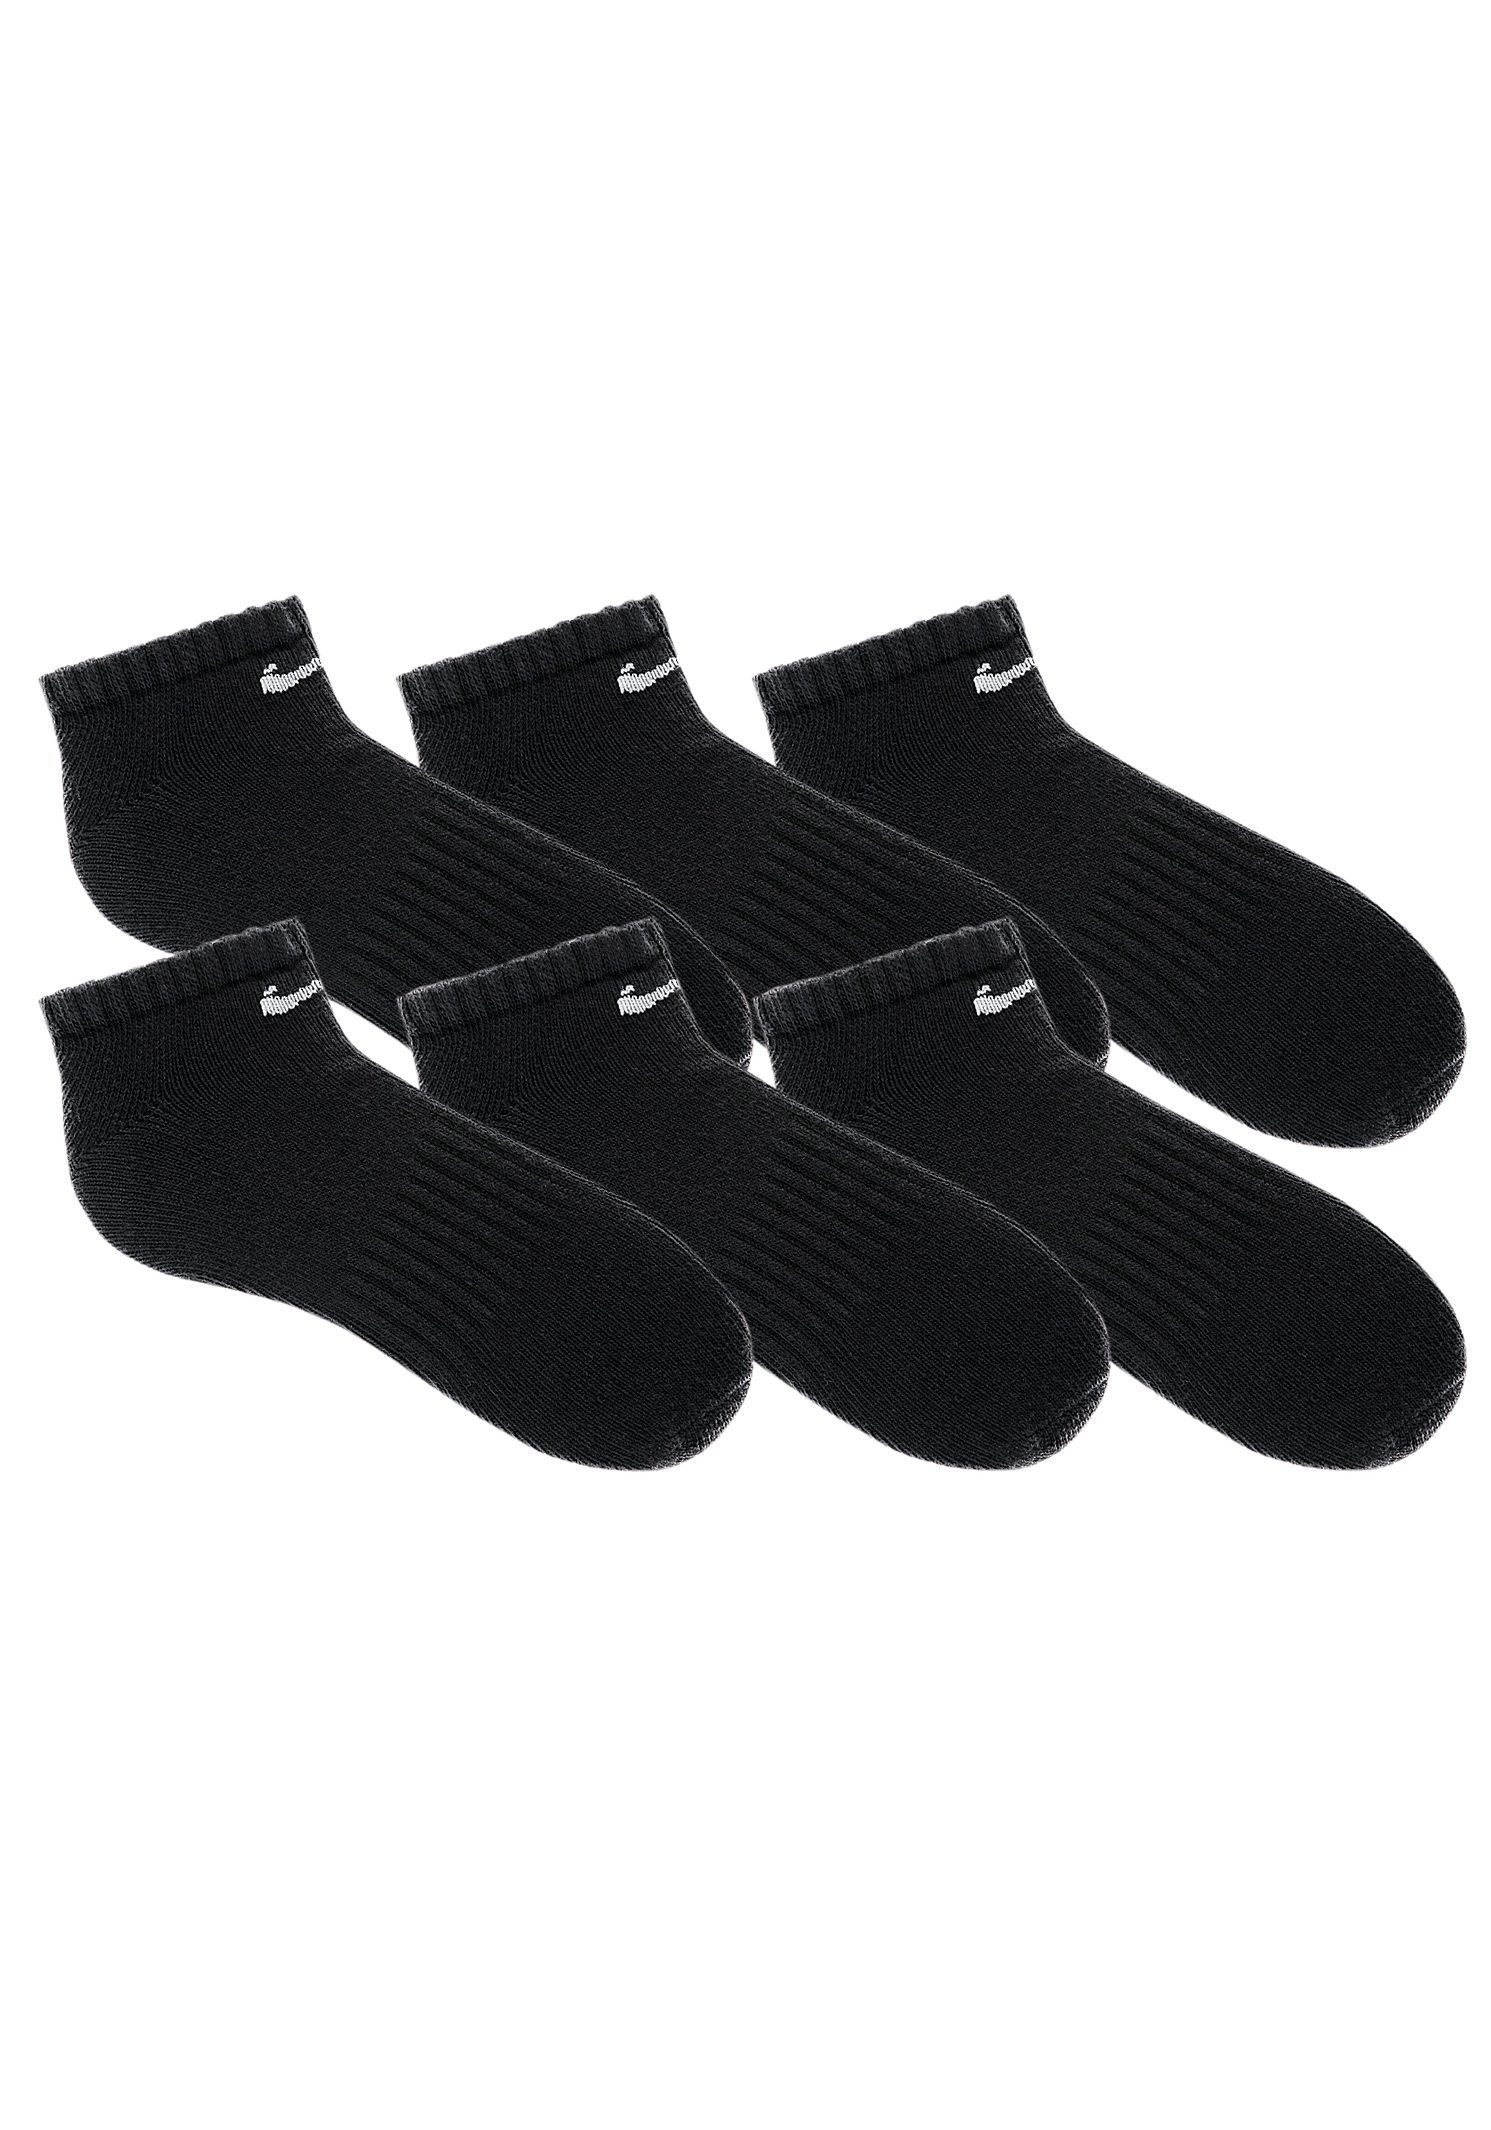 Nike Sneakersocken (6-Paar) schwarz mit Mittelfußgummi